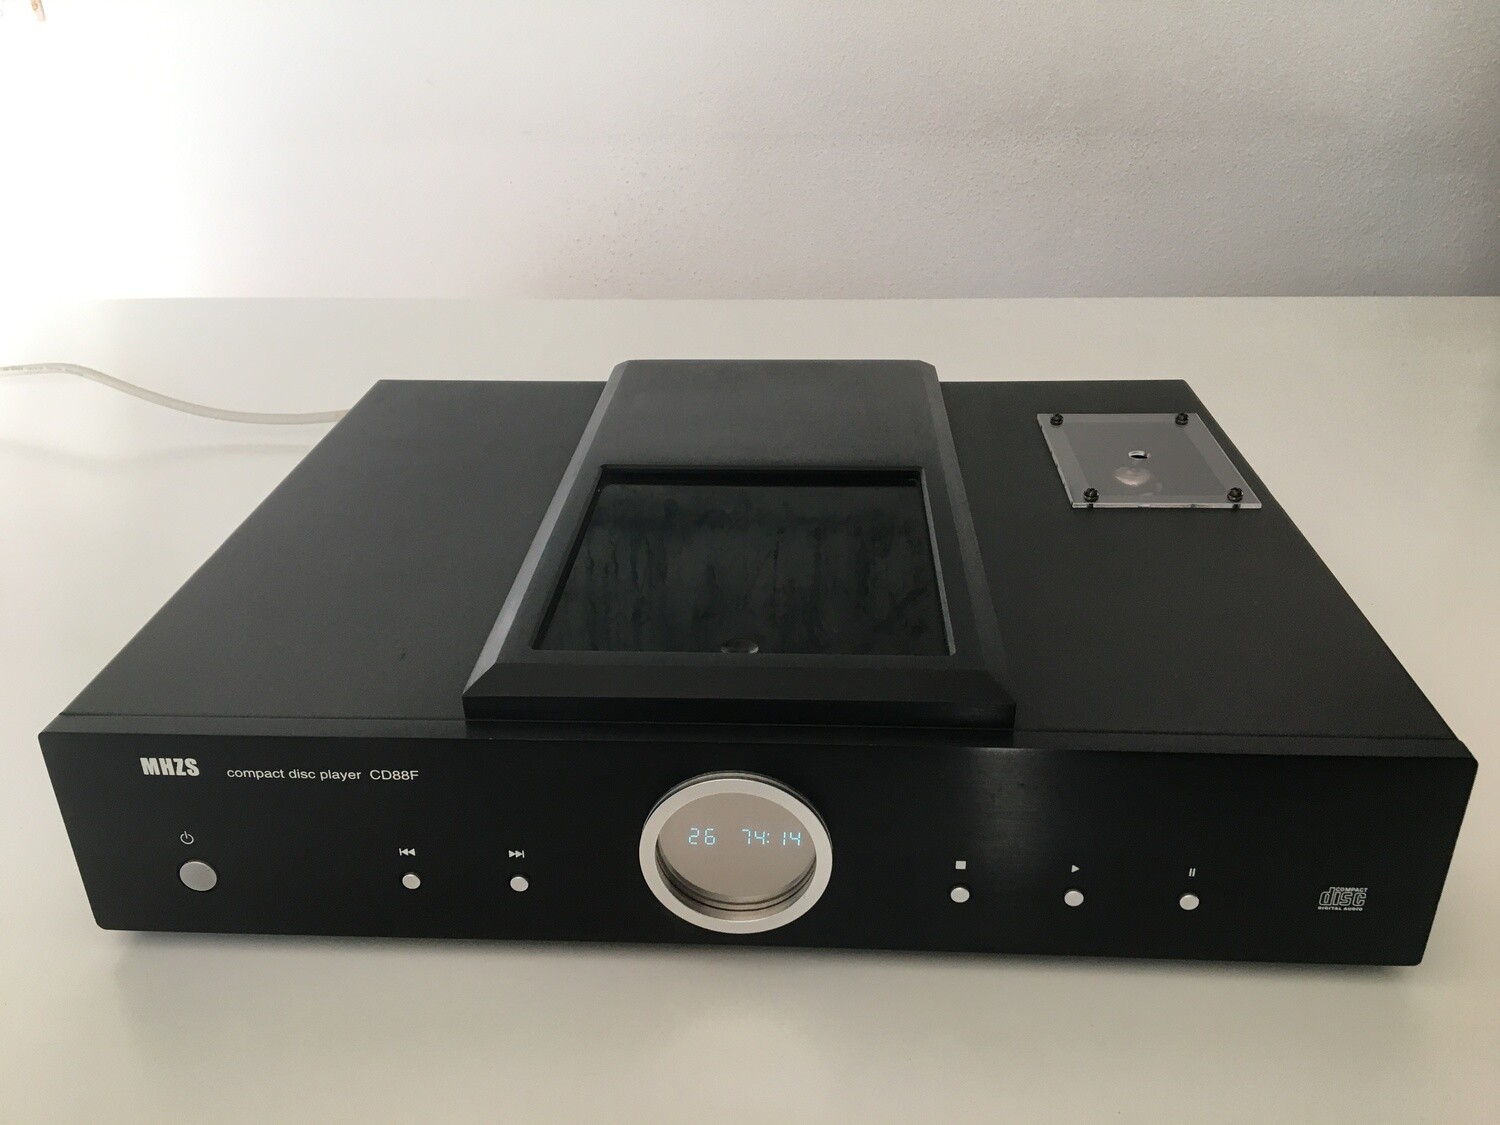 MHZS CD88F - High End CD Player